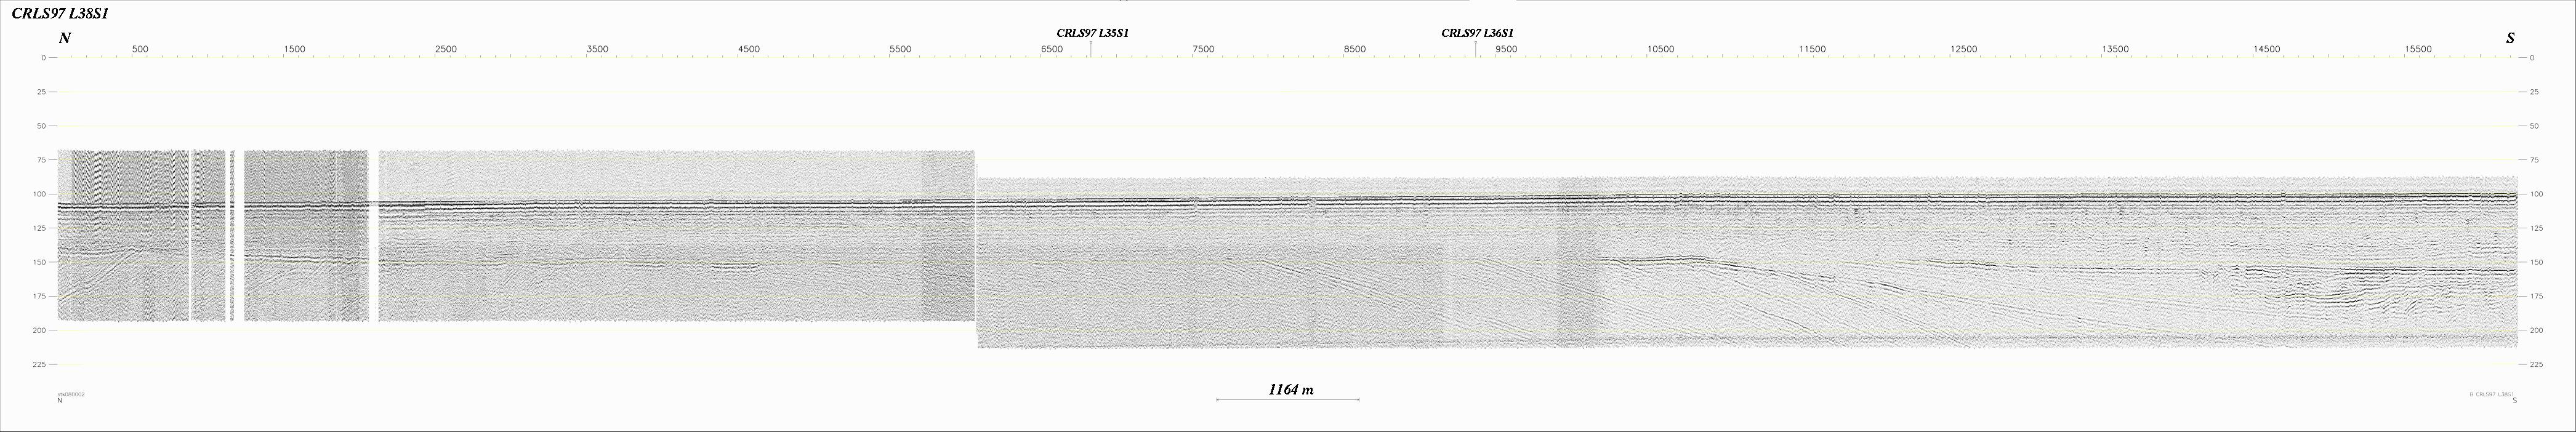 Seismic Reflection Profile Line No.: L38s1 (489158 bytes)